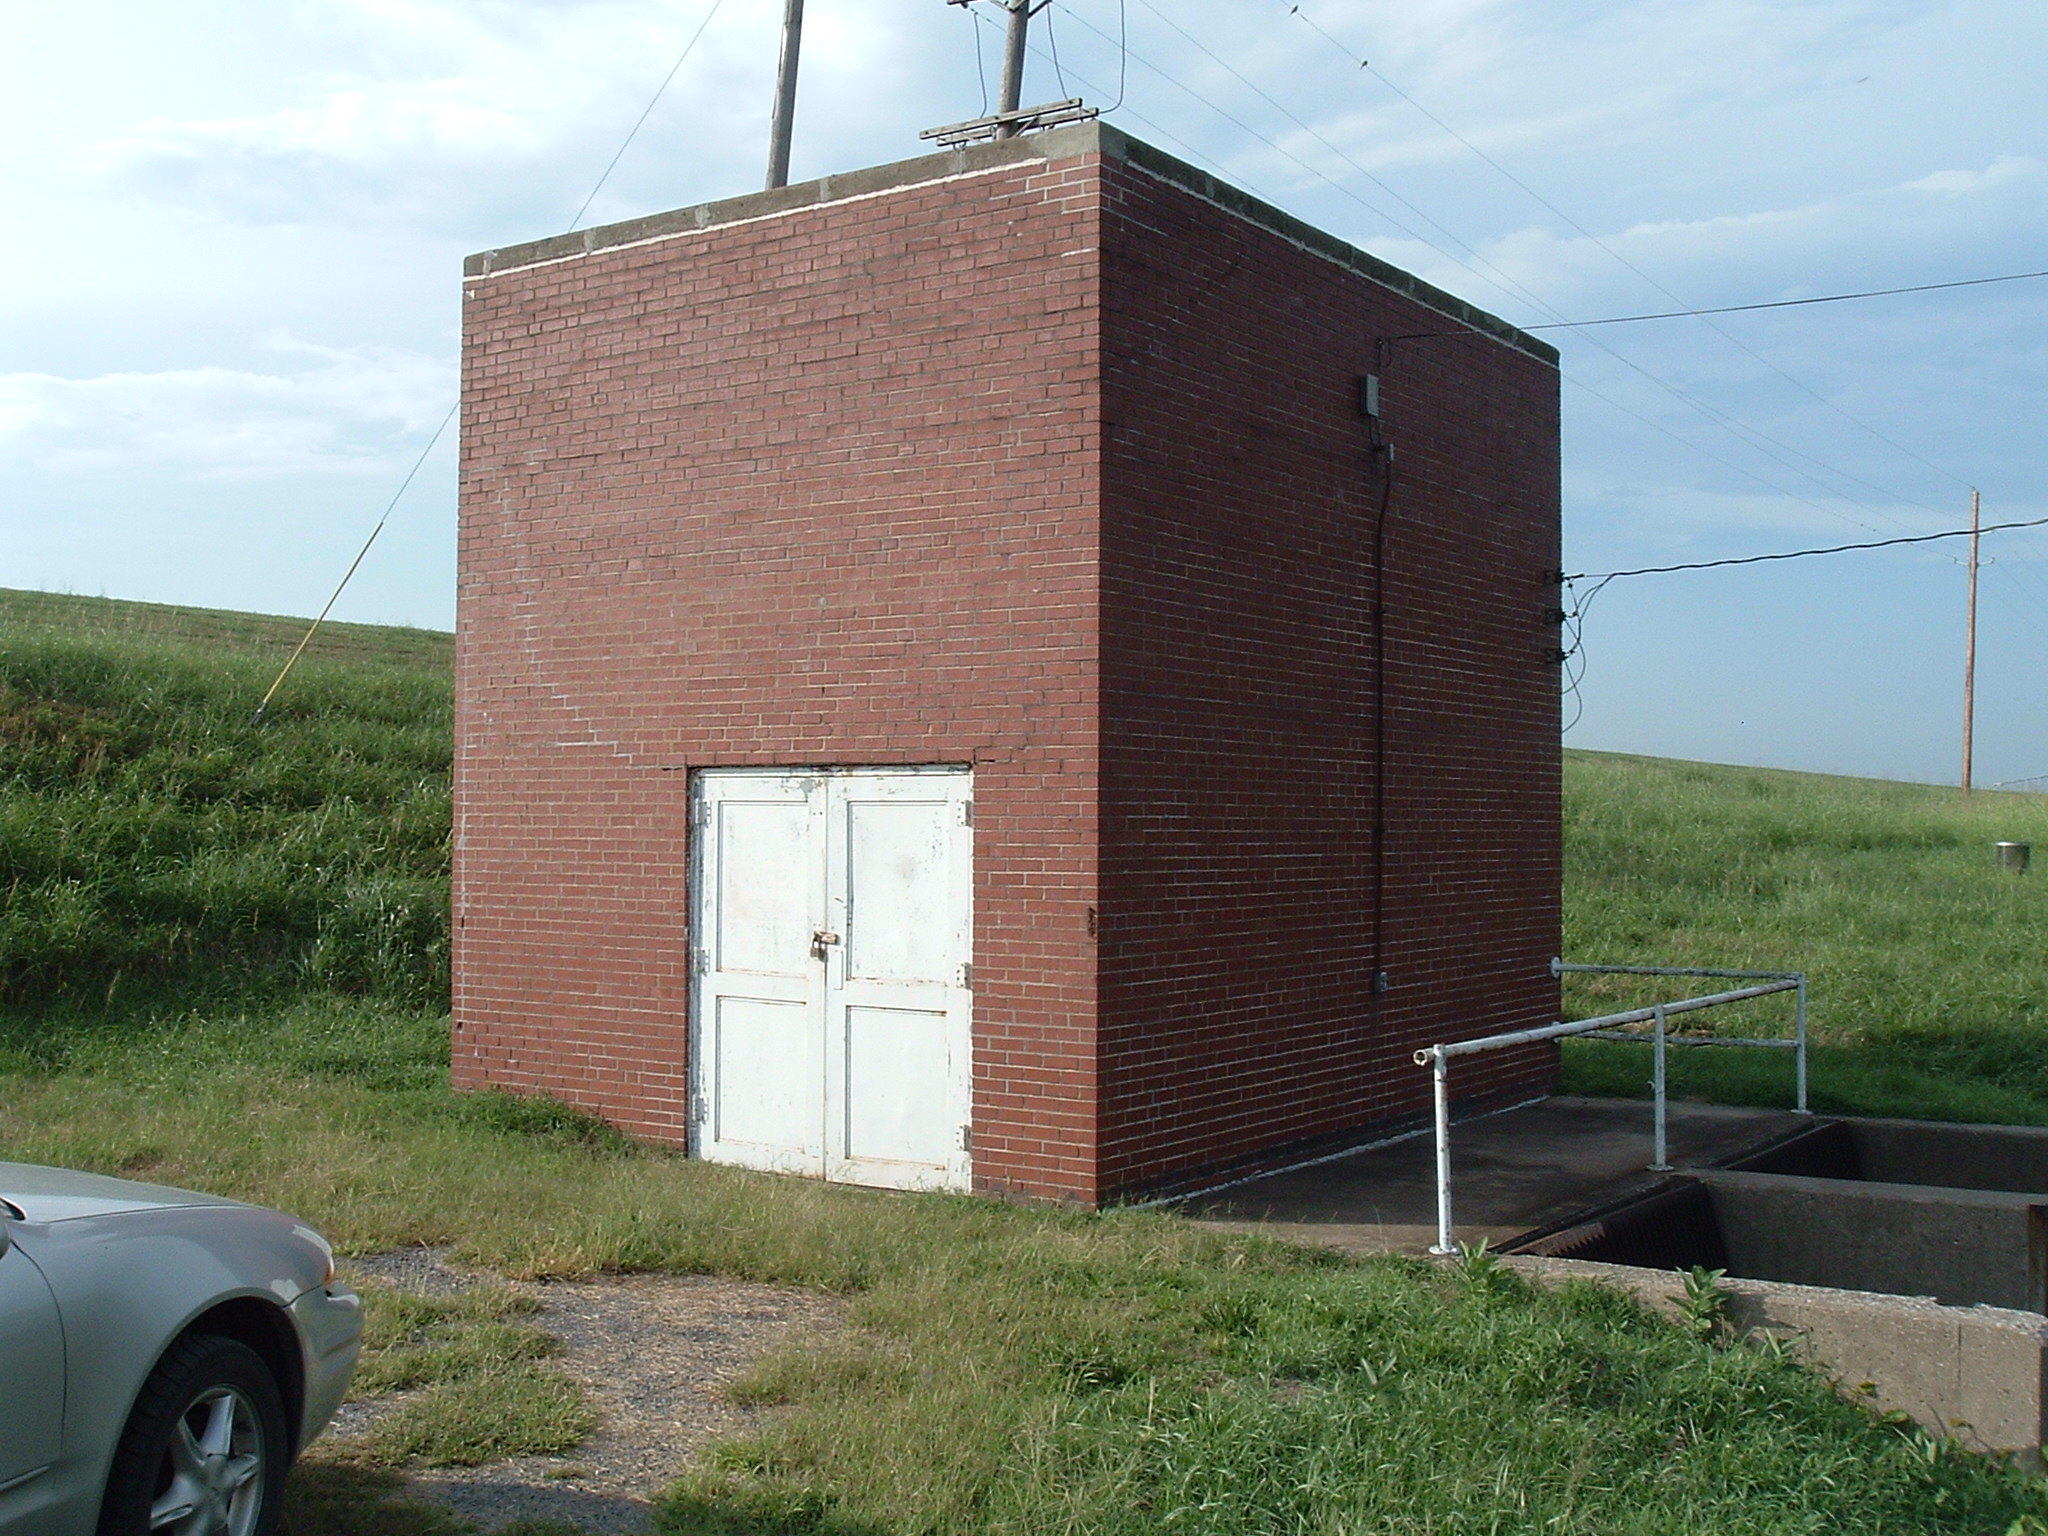 The Chouteau Pump Station